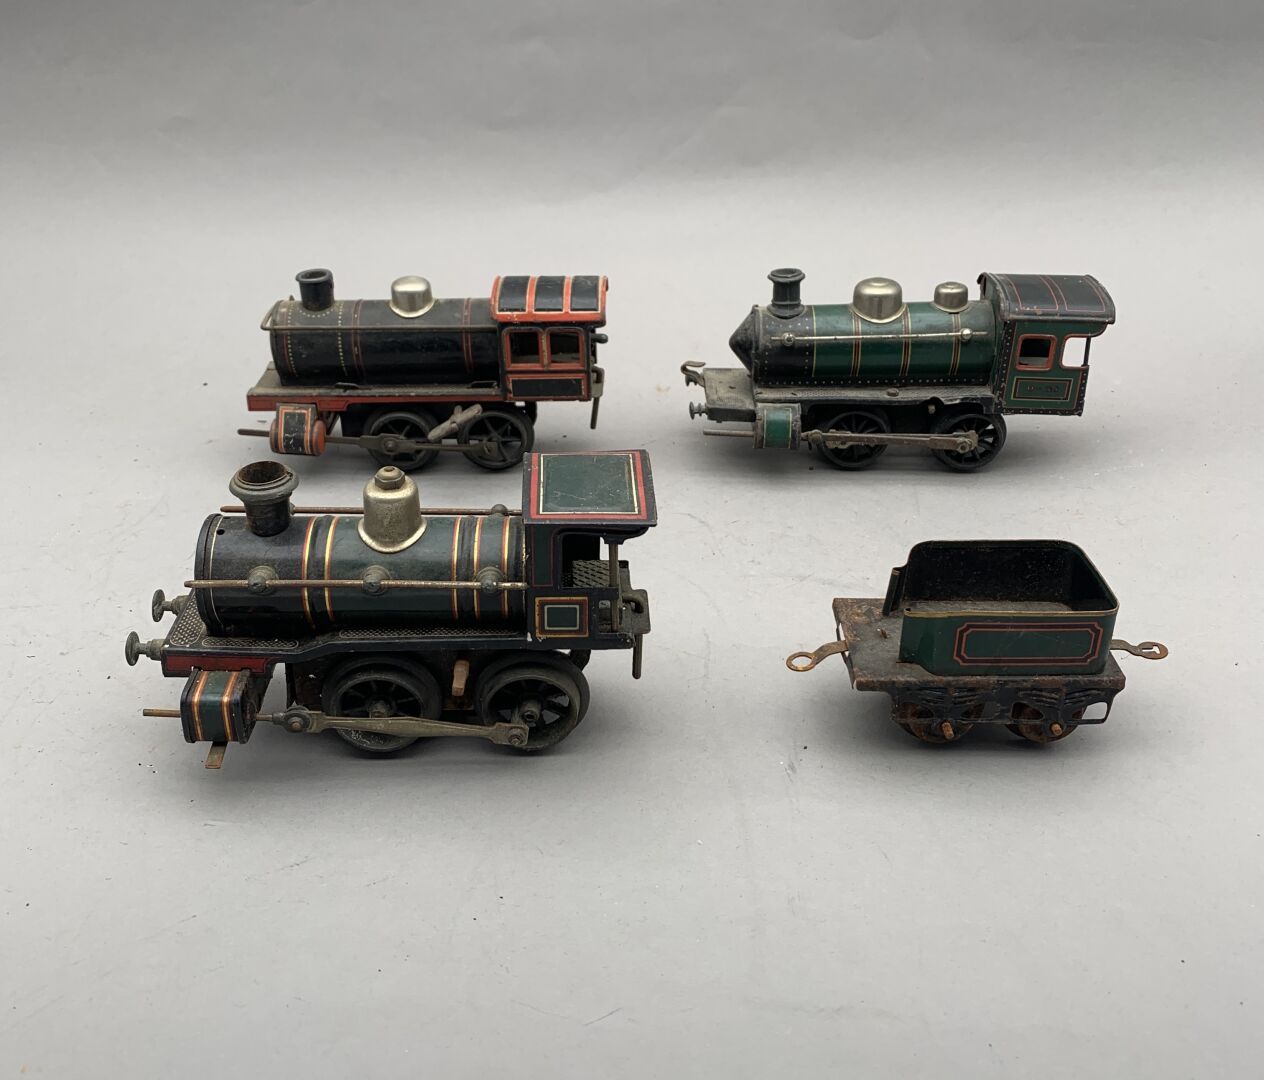 Null G.CARETTE，BING和各种 "0" 1915/1920。三台020机械机车的石印金属板。(缺少两份标书）。